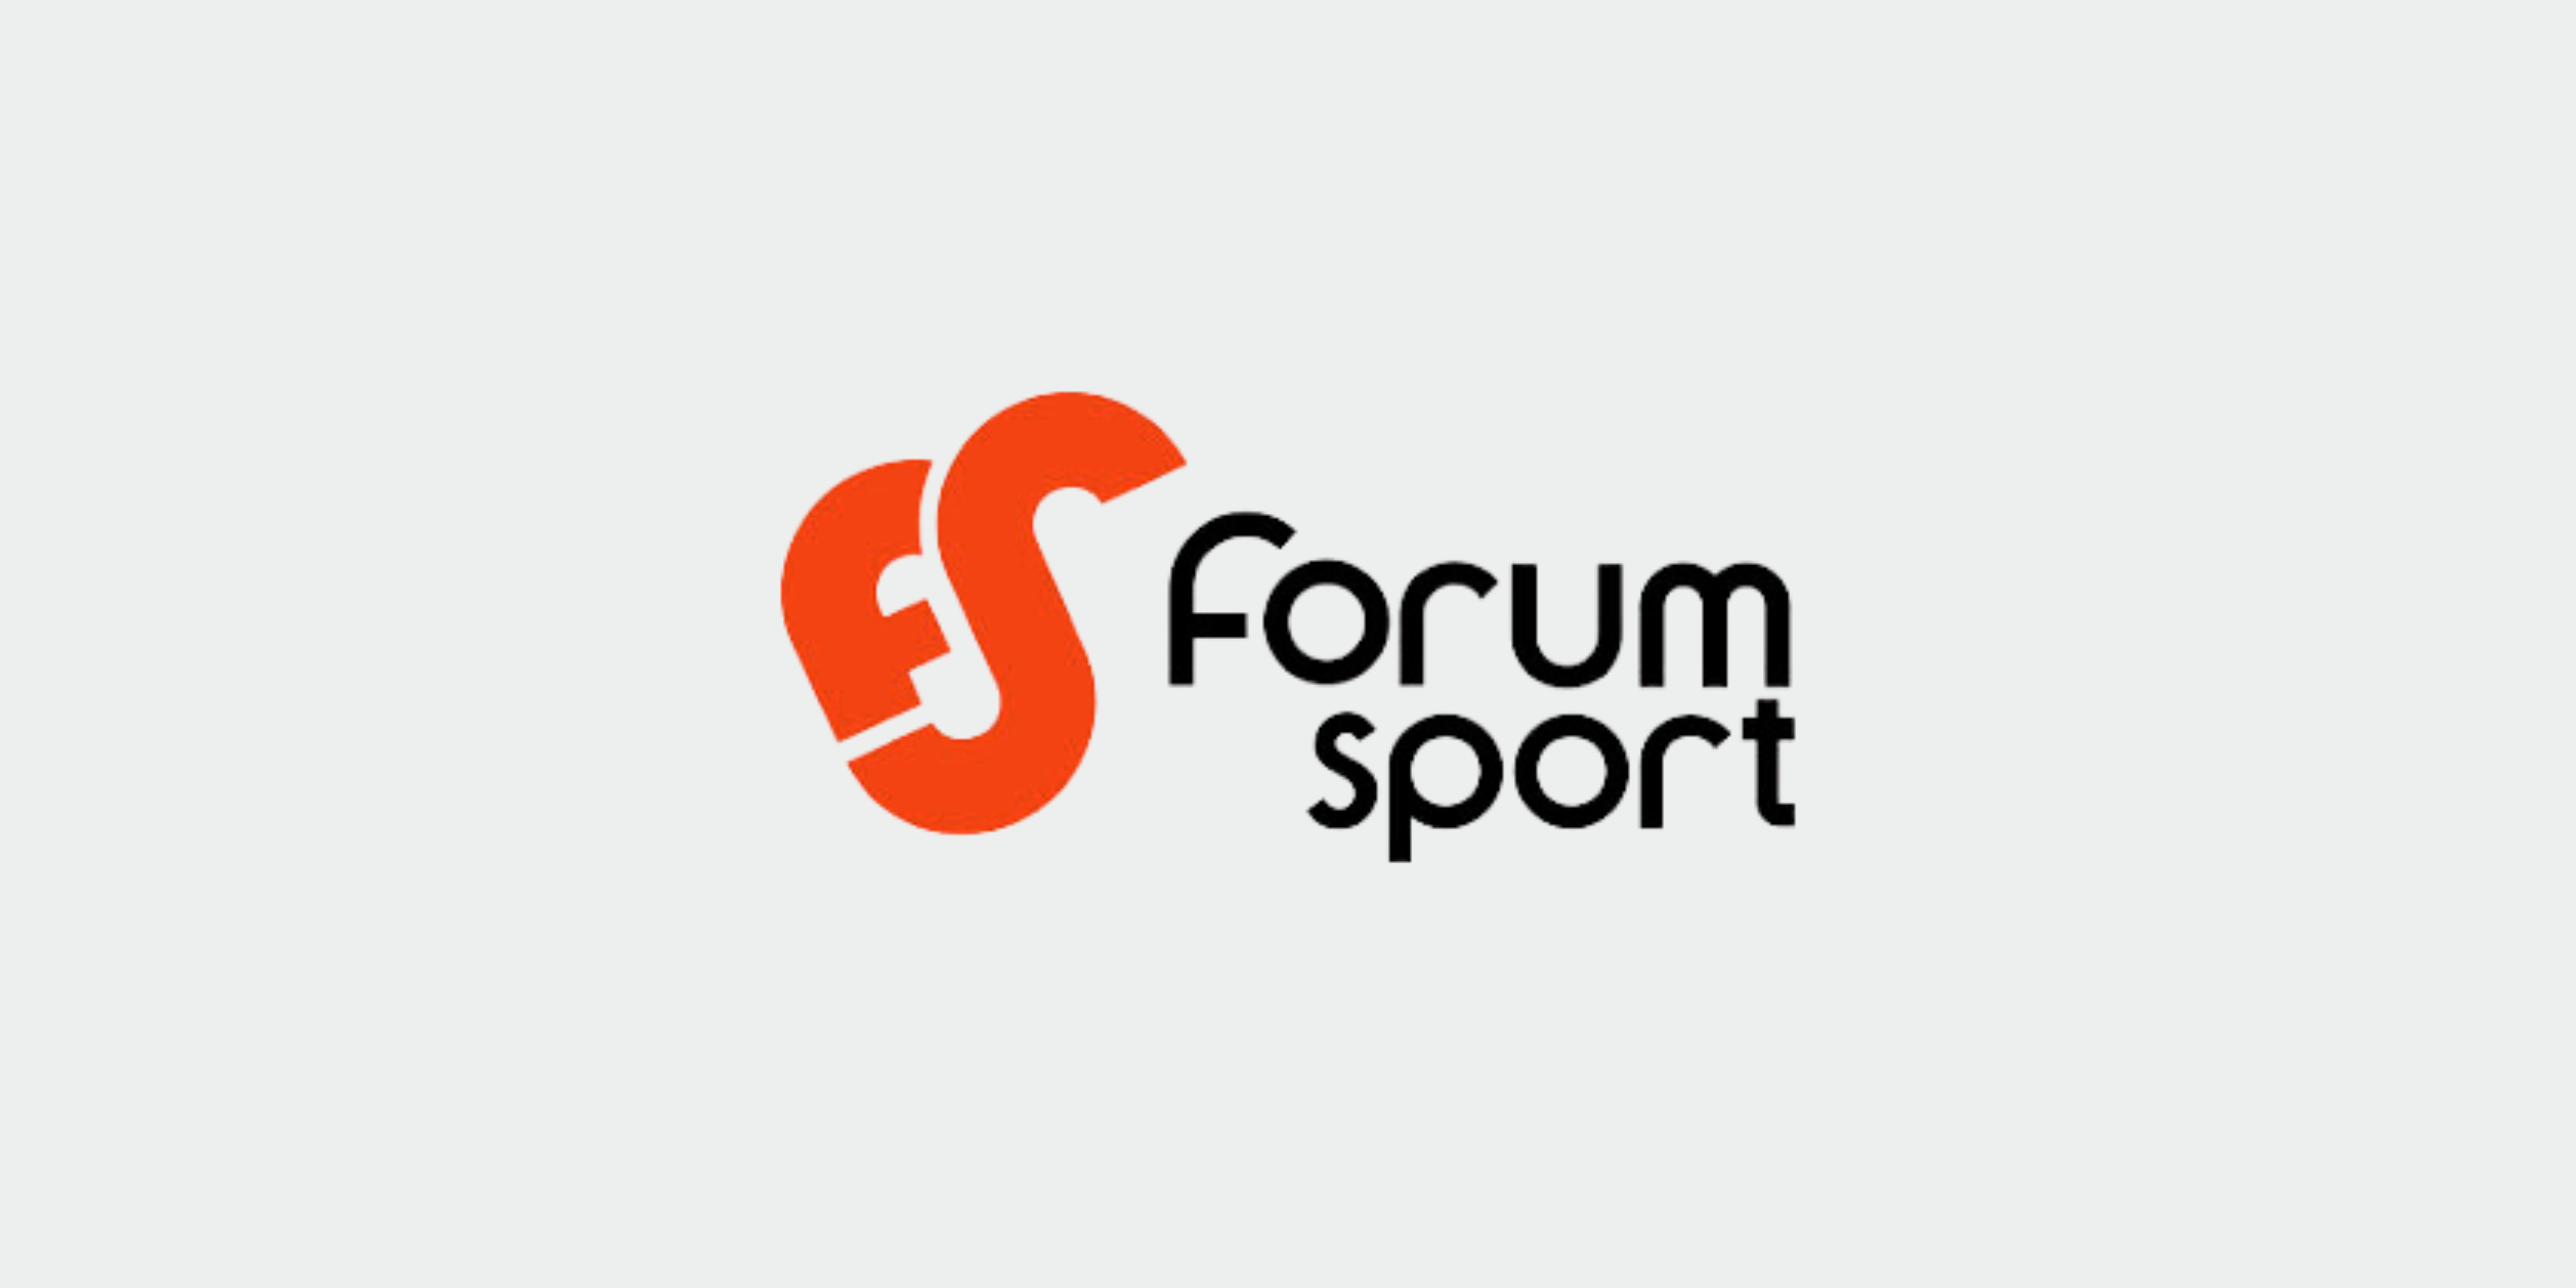 Forum sport<br />
